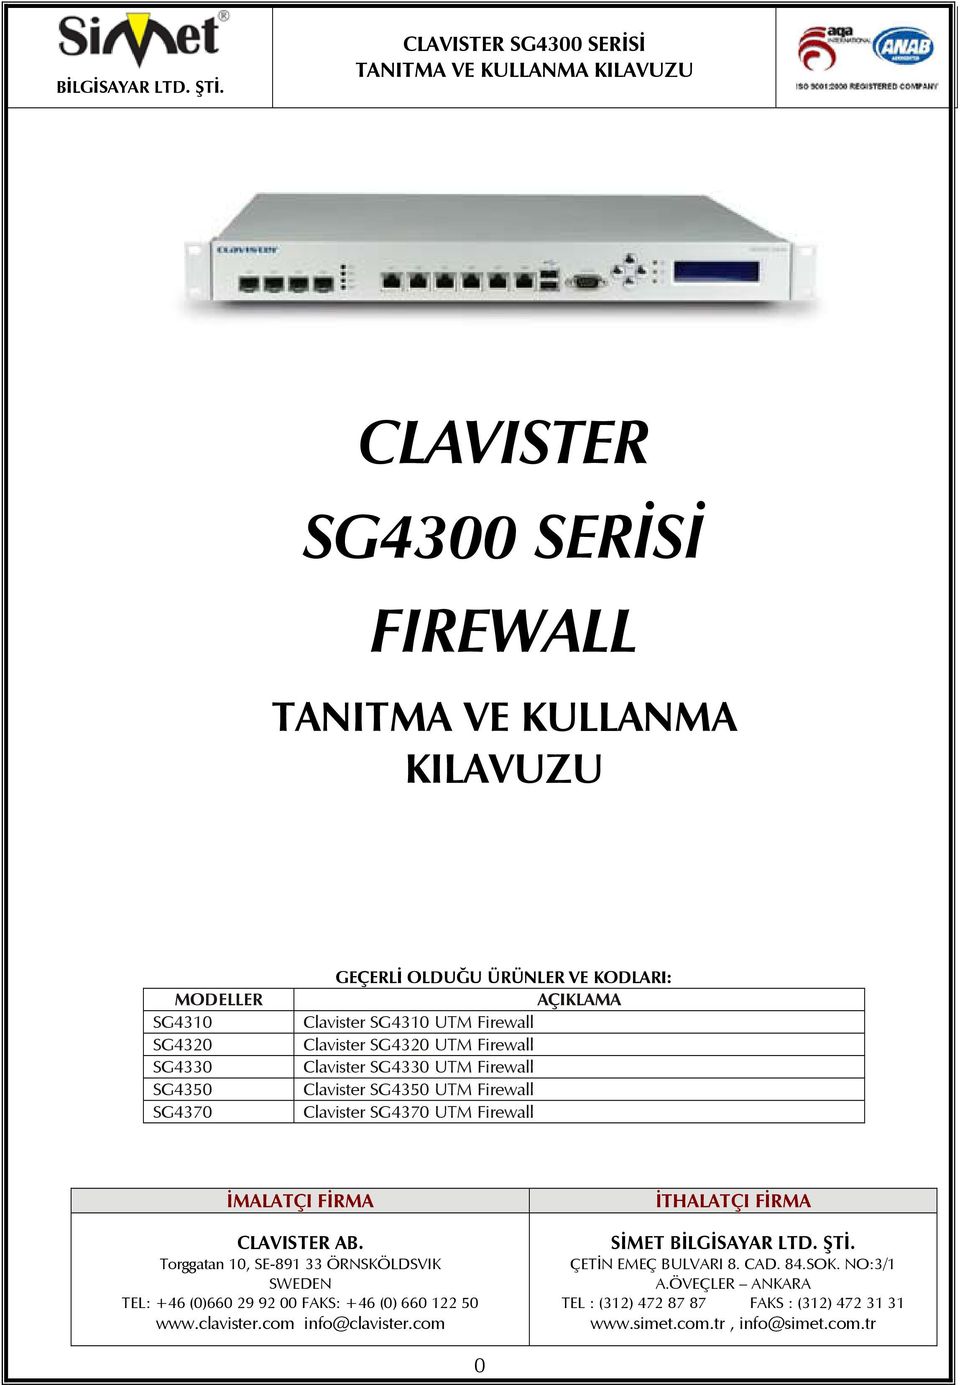 CLAVISTER AB. Torggatan 10, SE-891 33 ÖRNSKÖLDSVIK SWEDEN TEL: +46 (0)660 29 92 00 FAKS: +46 (0) 660 122 50 www.clavister.com info@clavister.